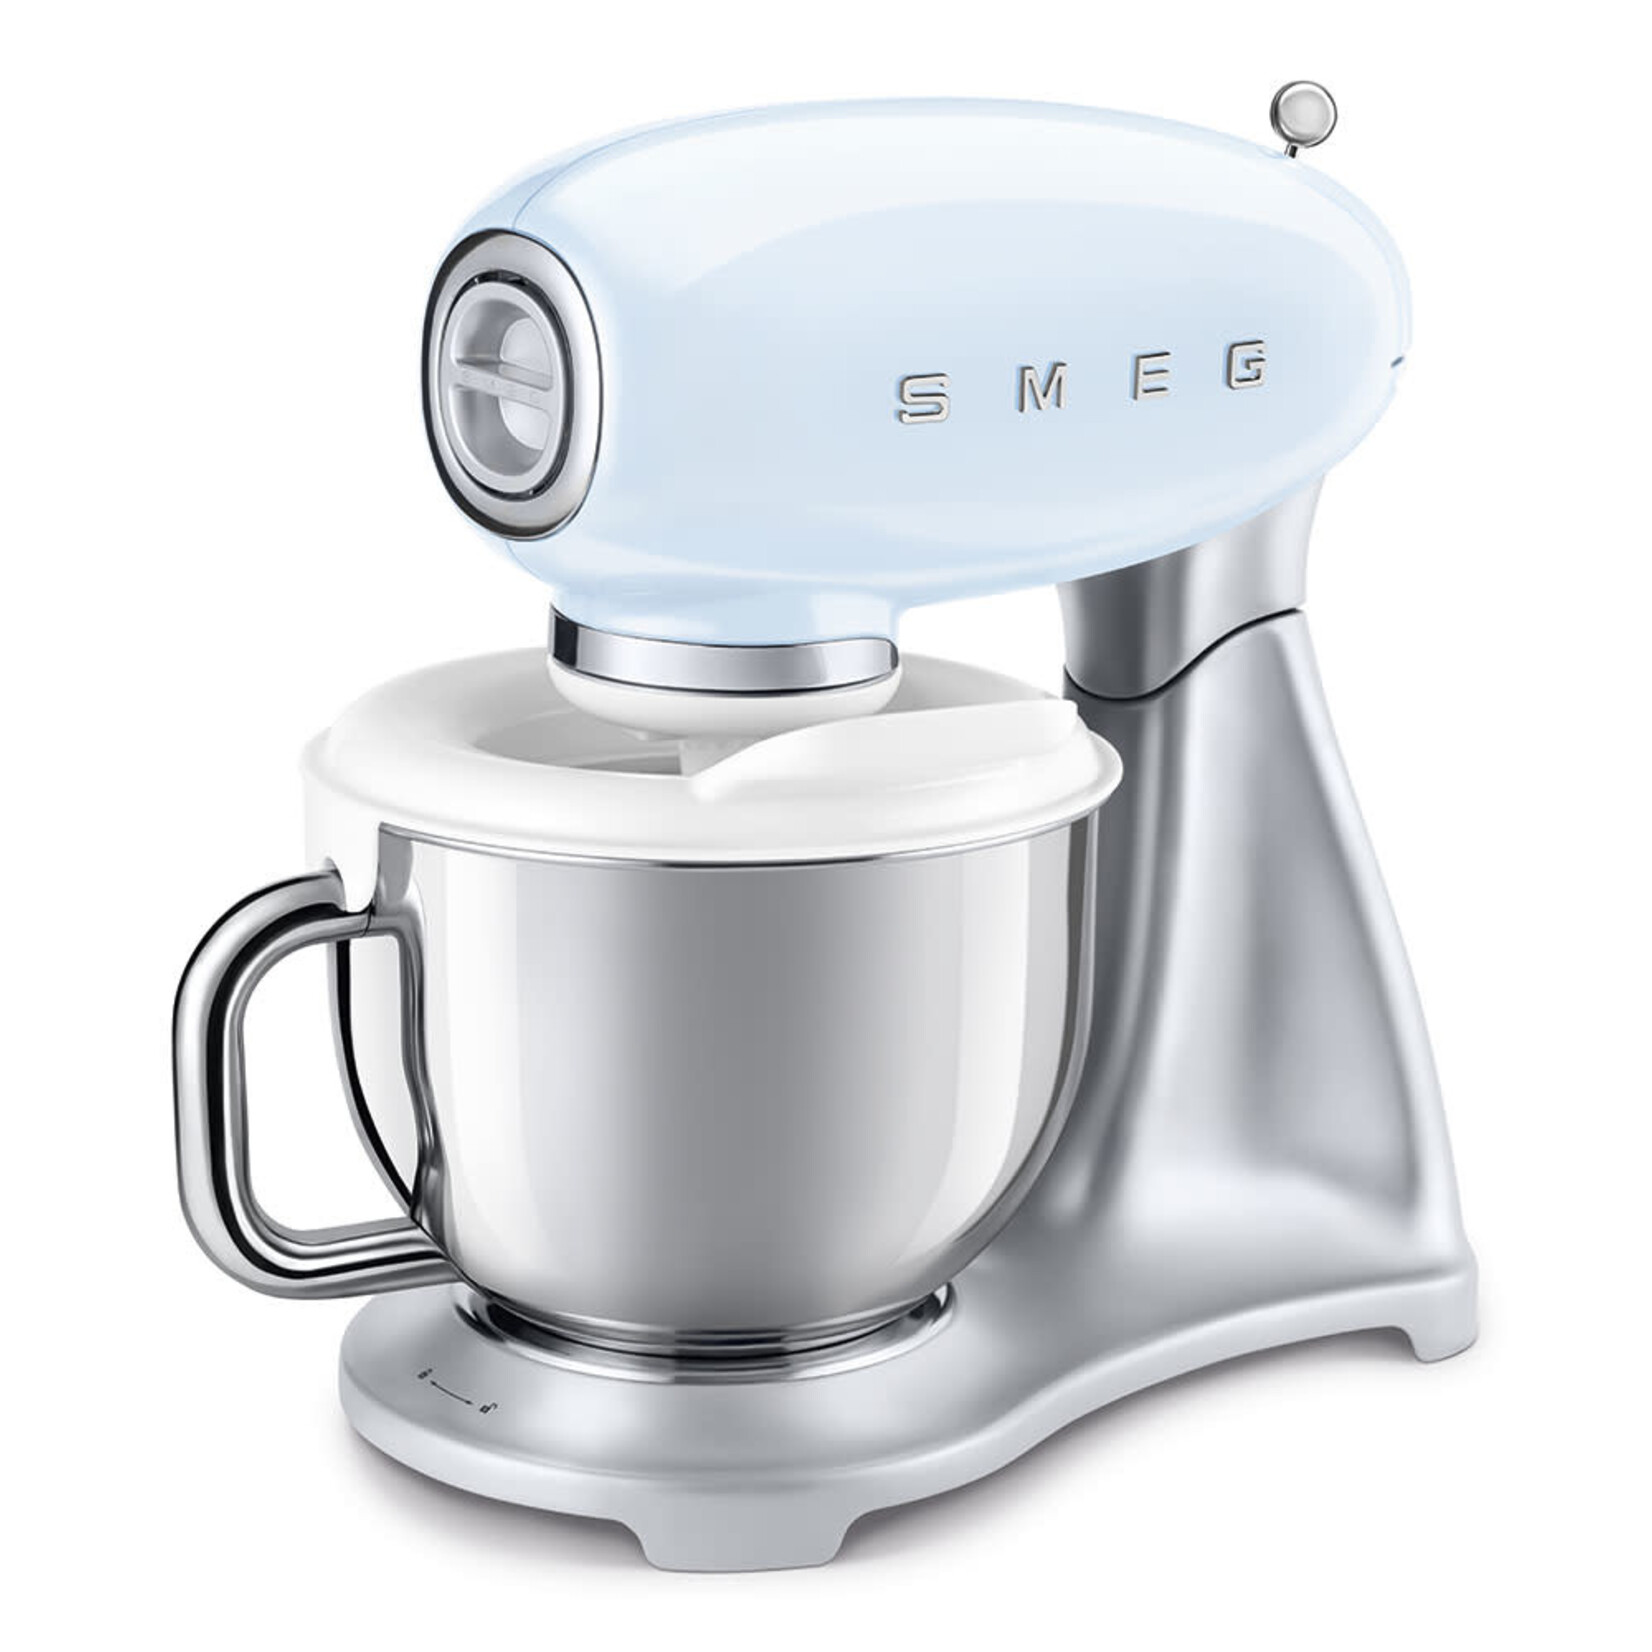 SMEG Smeg Stand Mixer Accessories -  Ice Cream Maker